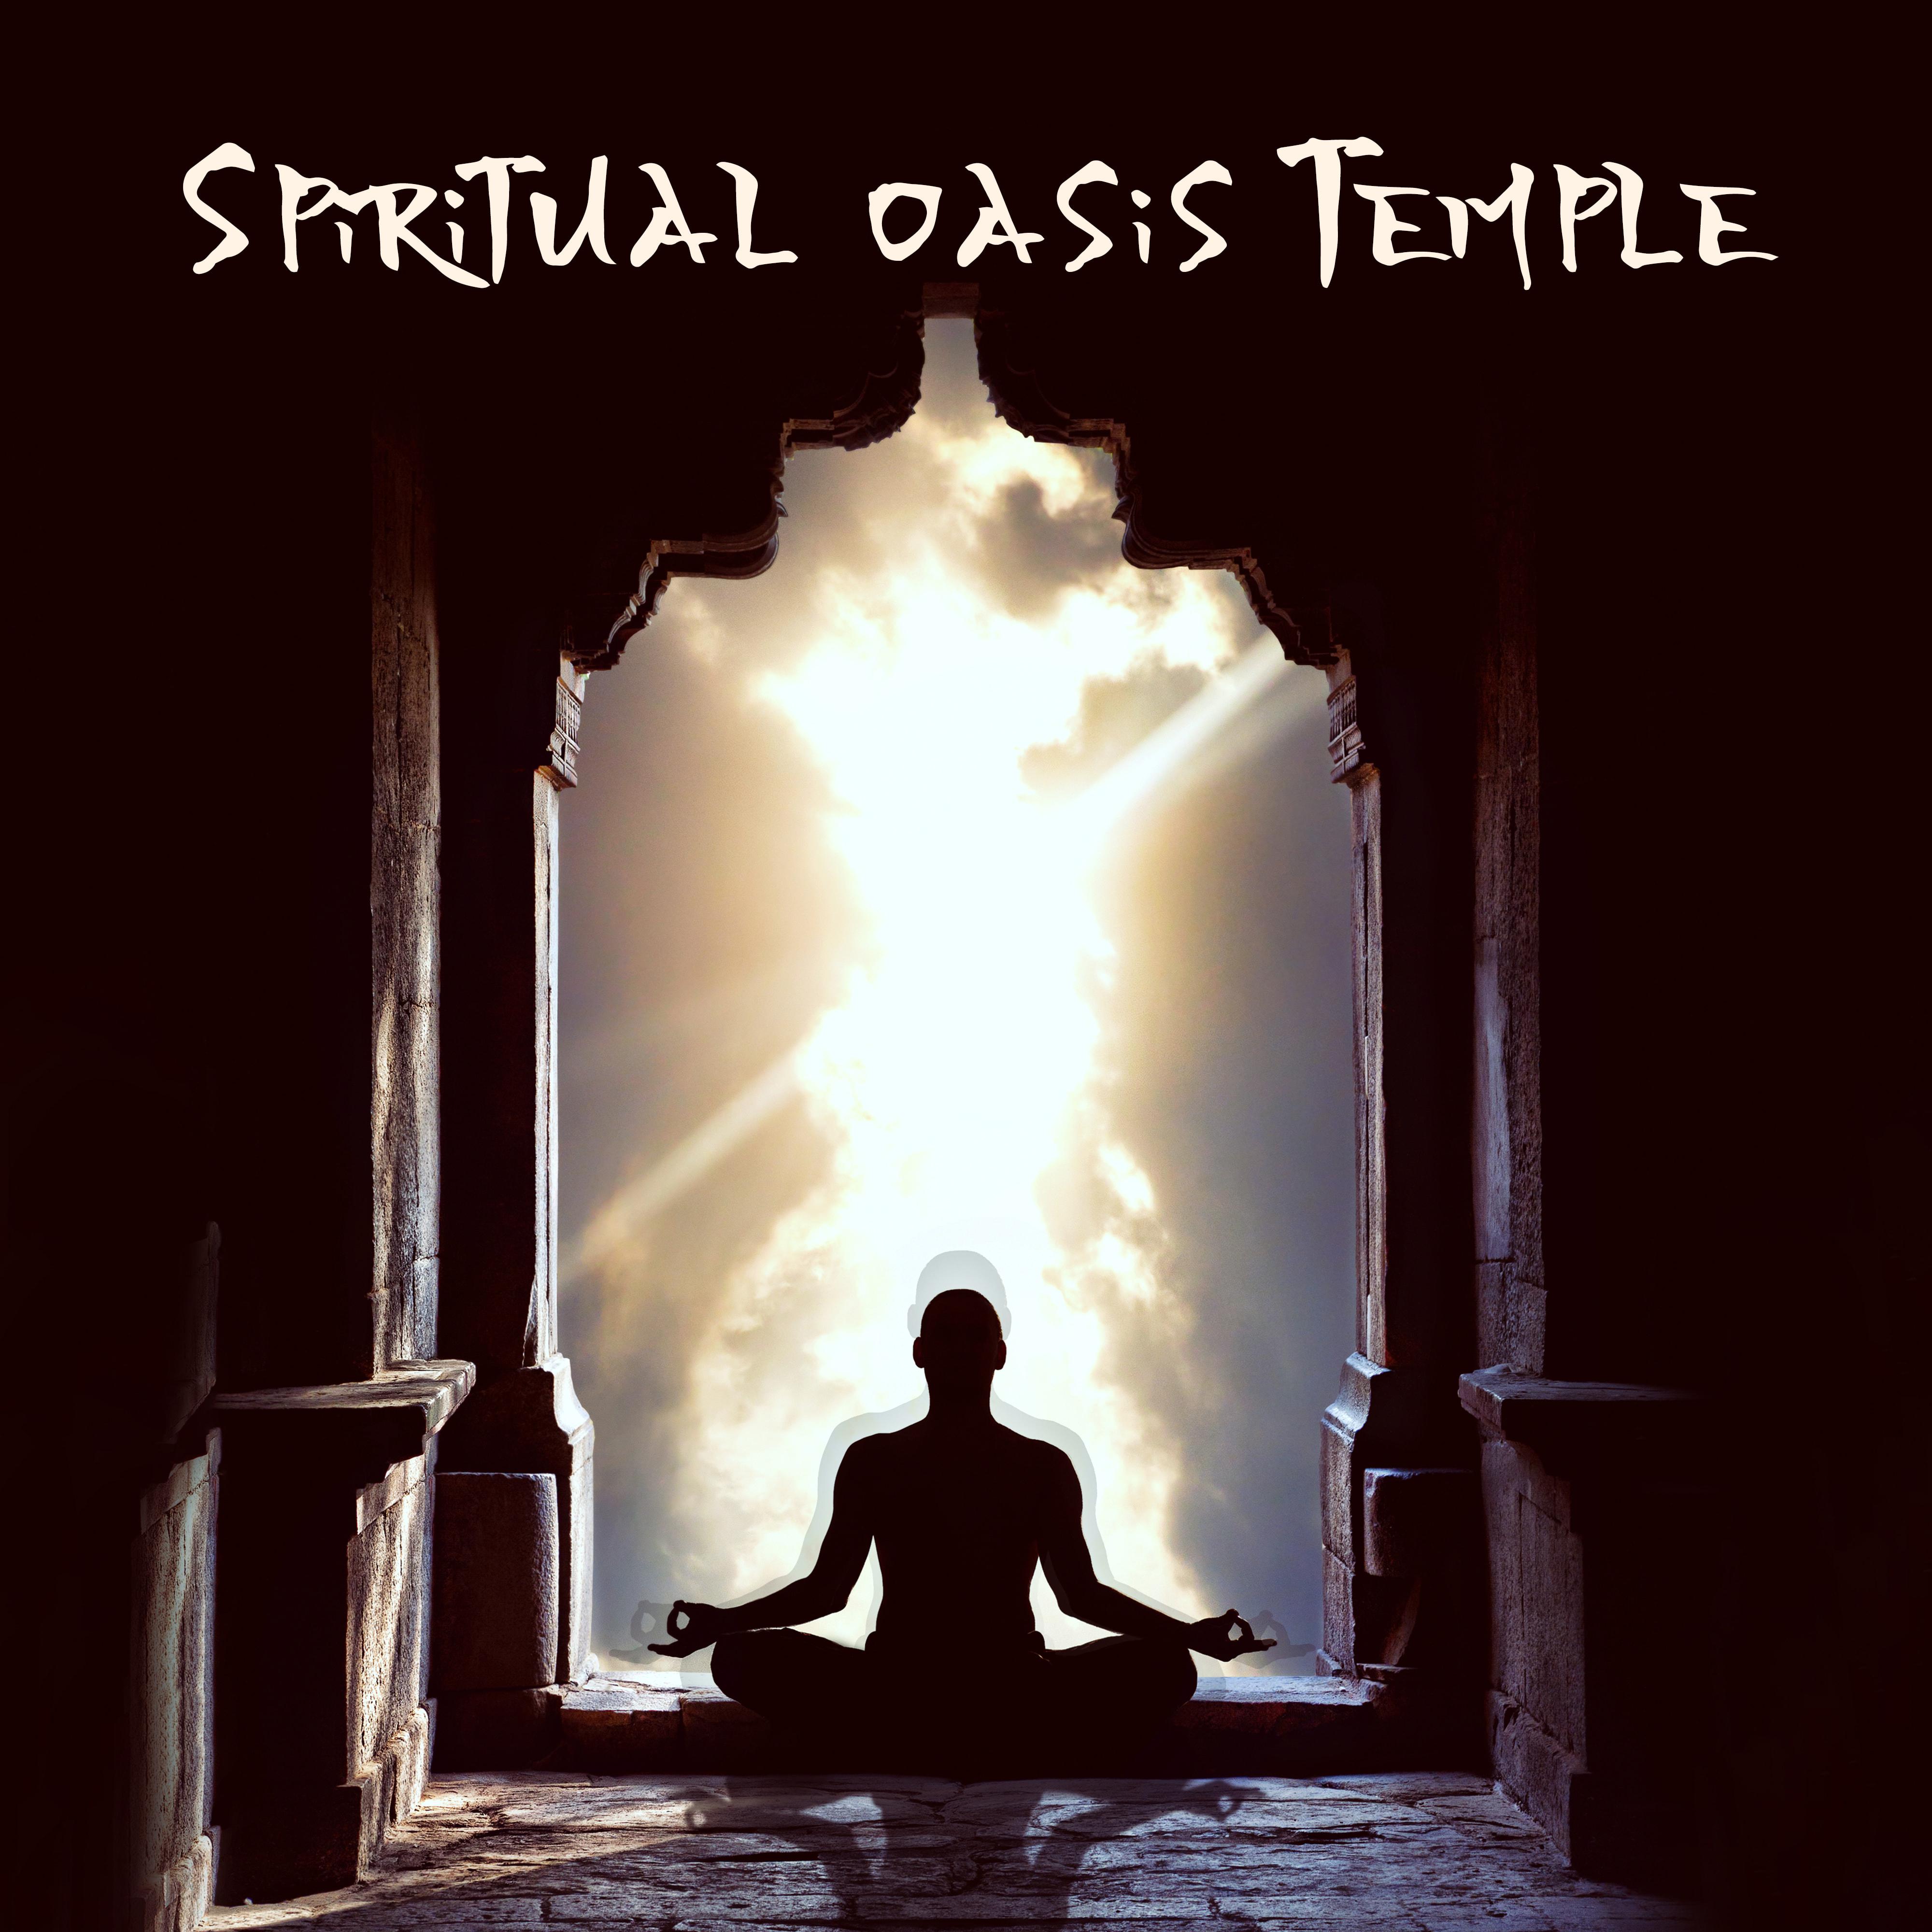 Spiritual Oasis Temple